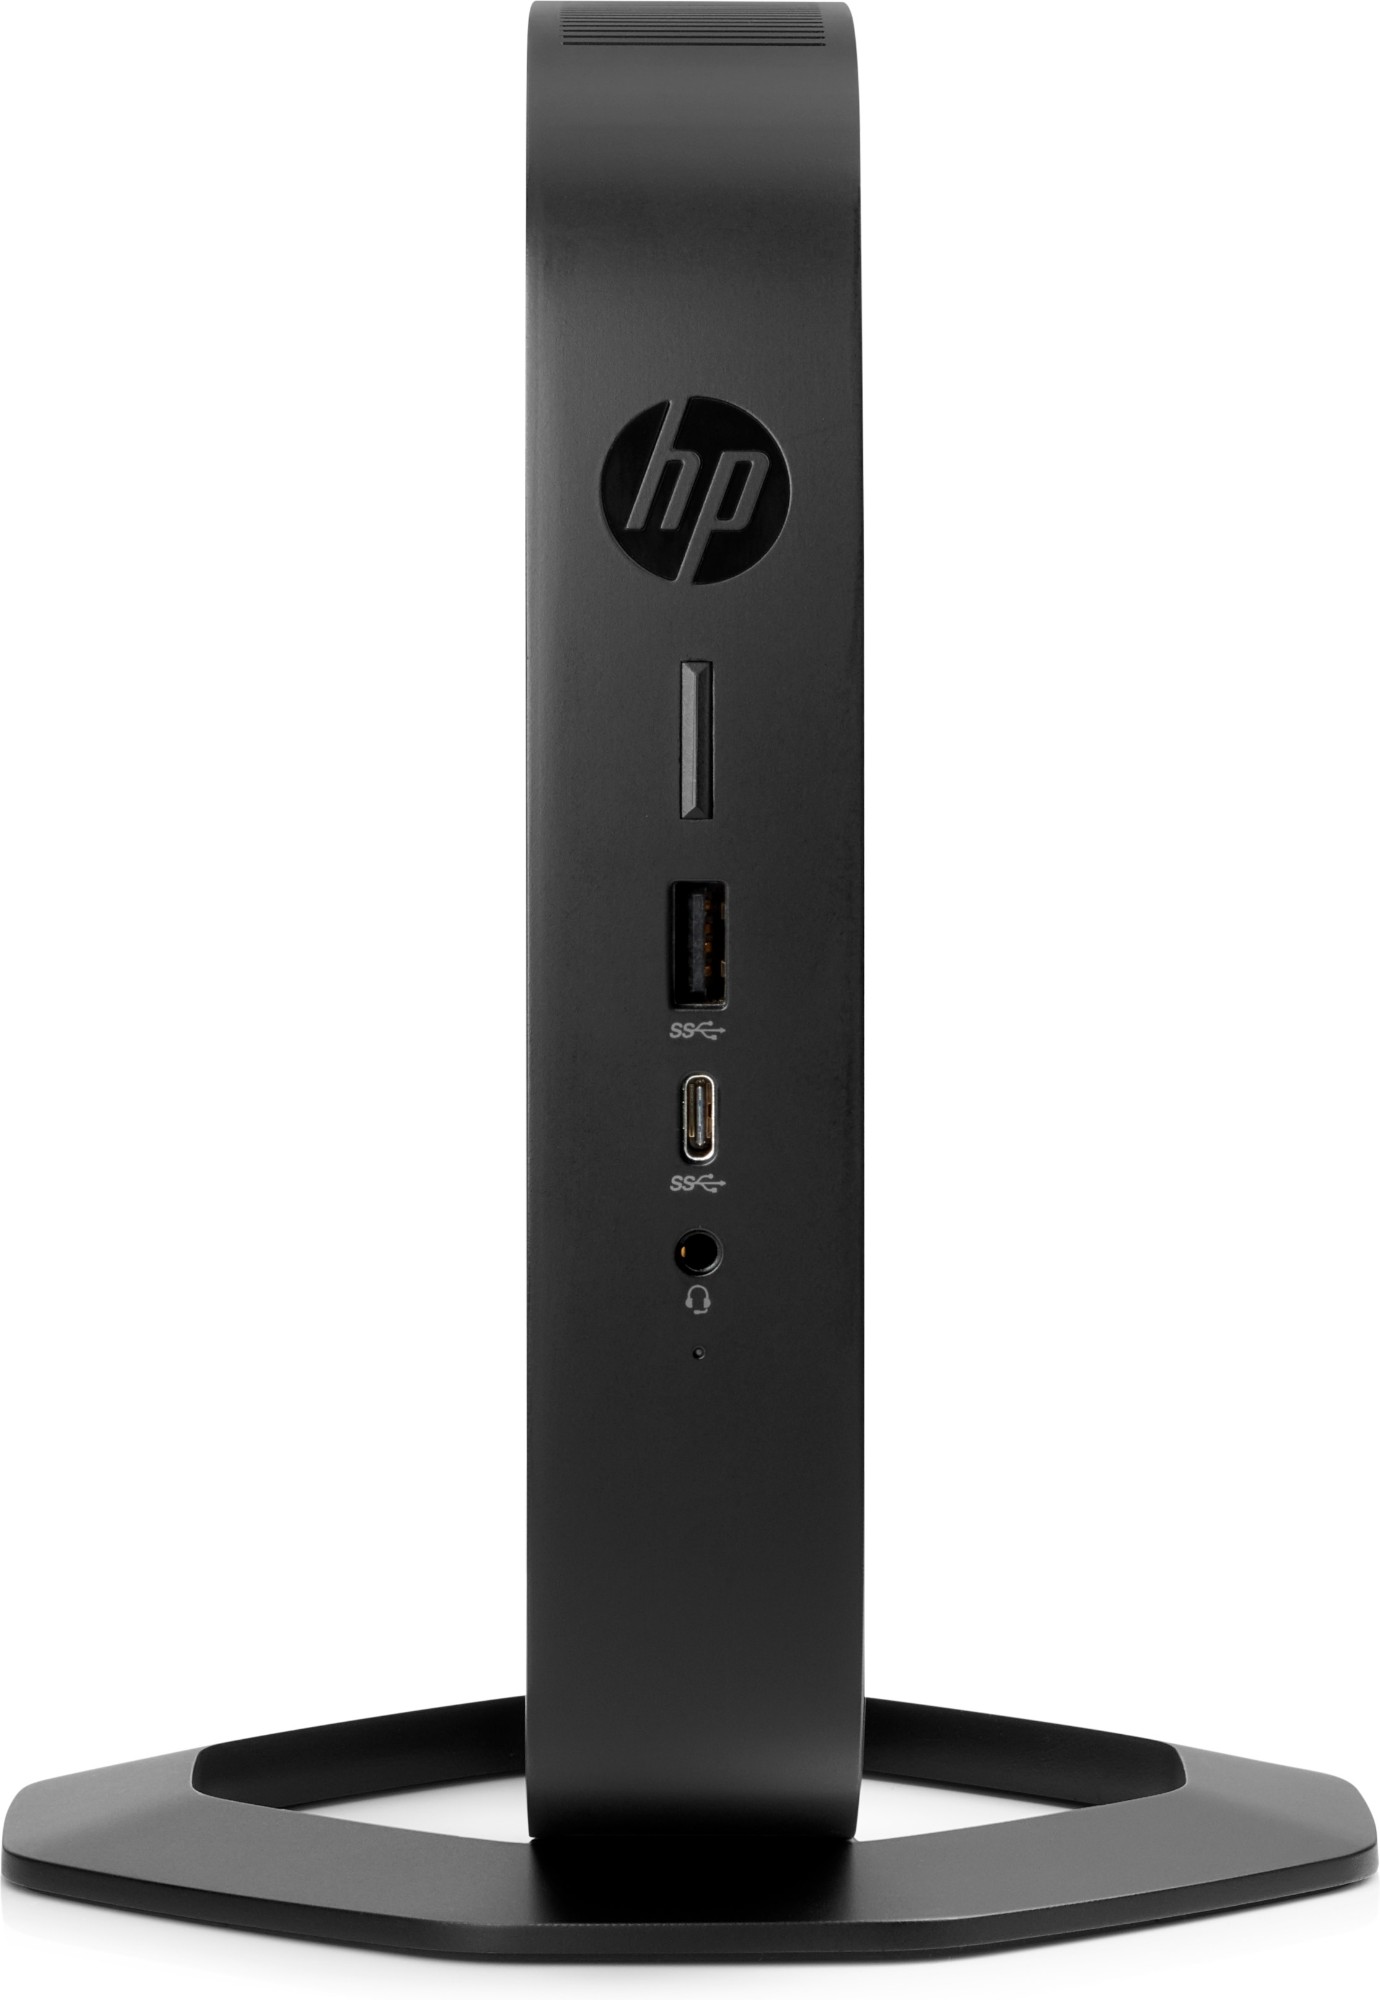 HP t540 1.5 GHz Windows 10 IoT Enterprise 1.4 kg Black R1305G